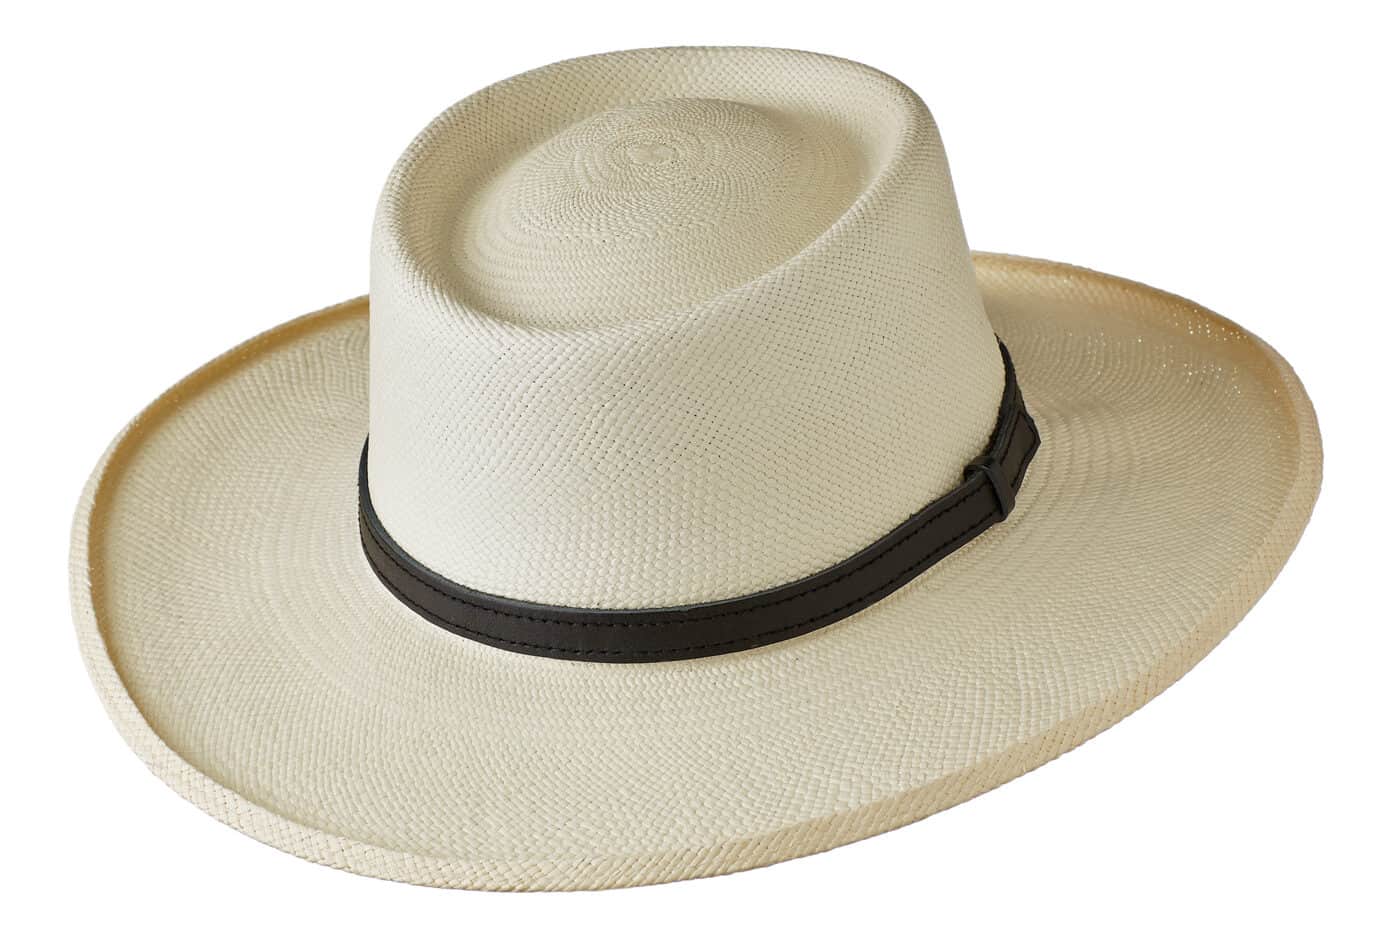 Planter style Panama hat